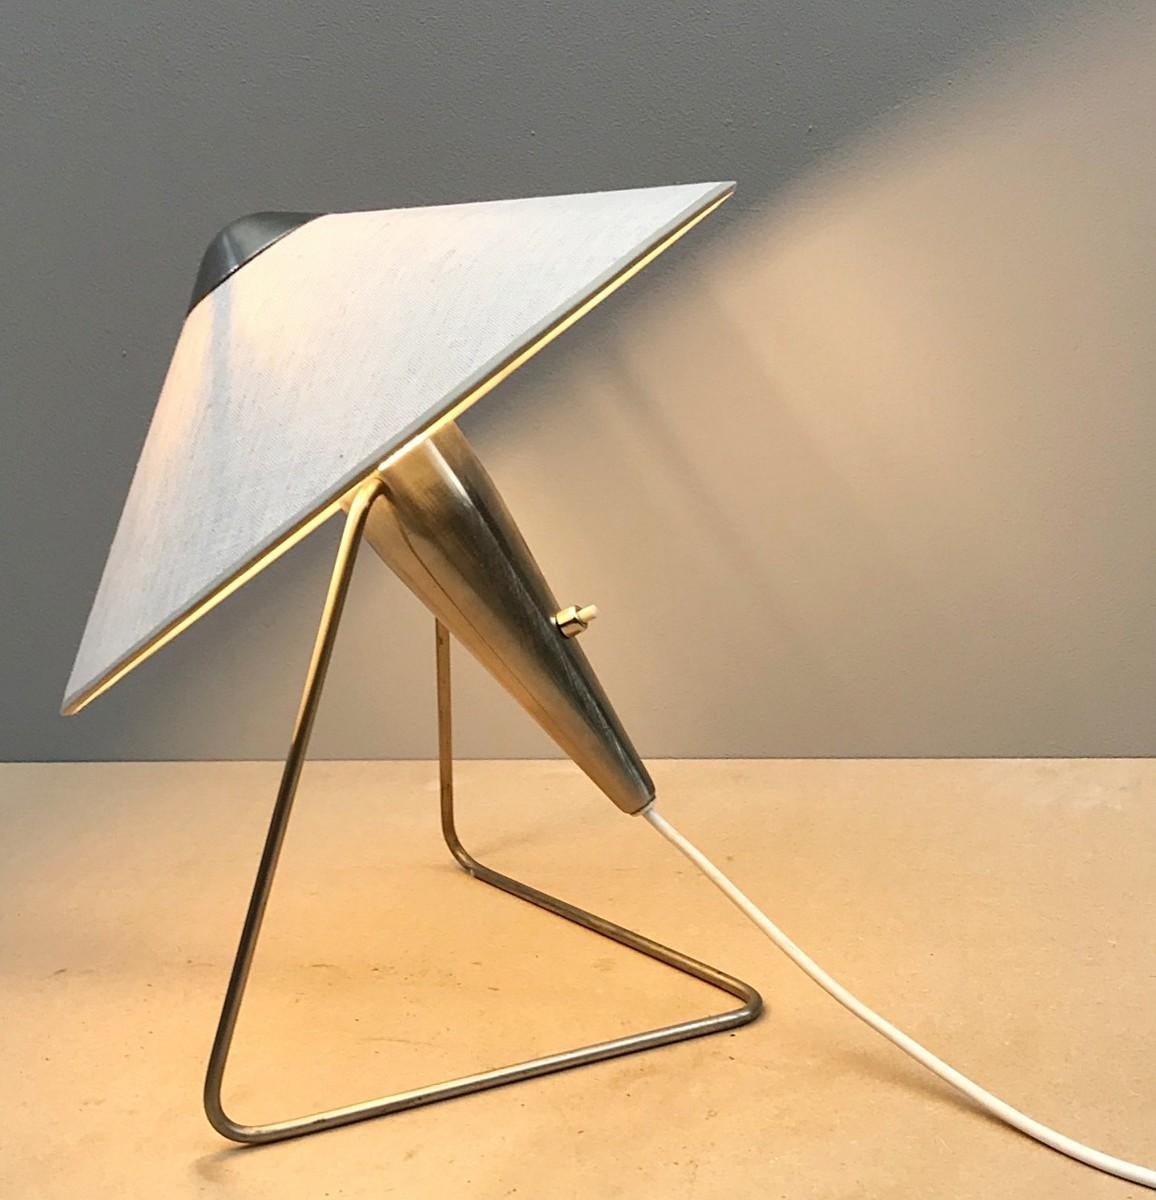 Italian Brass Table Lamp, 1950s